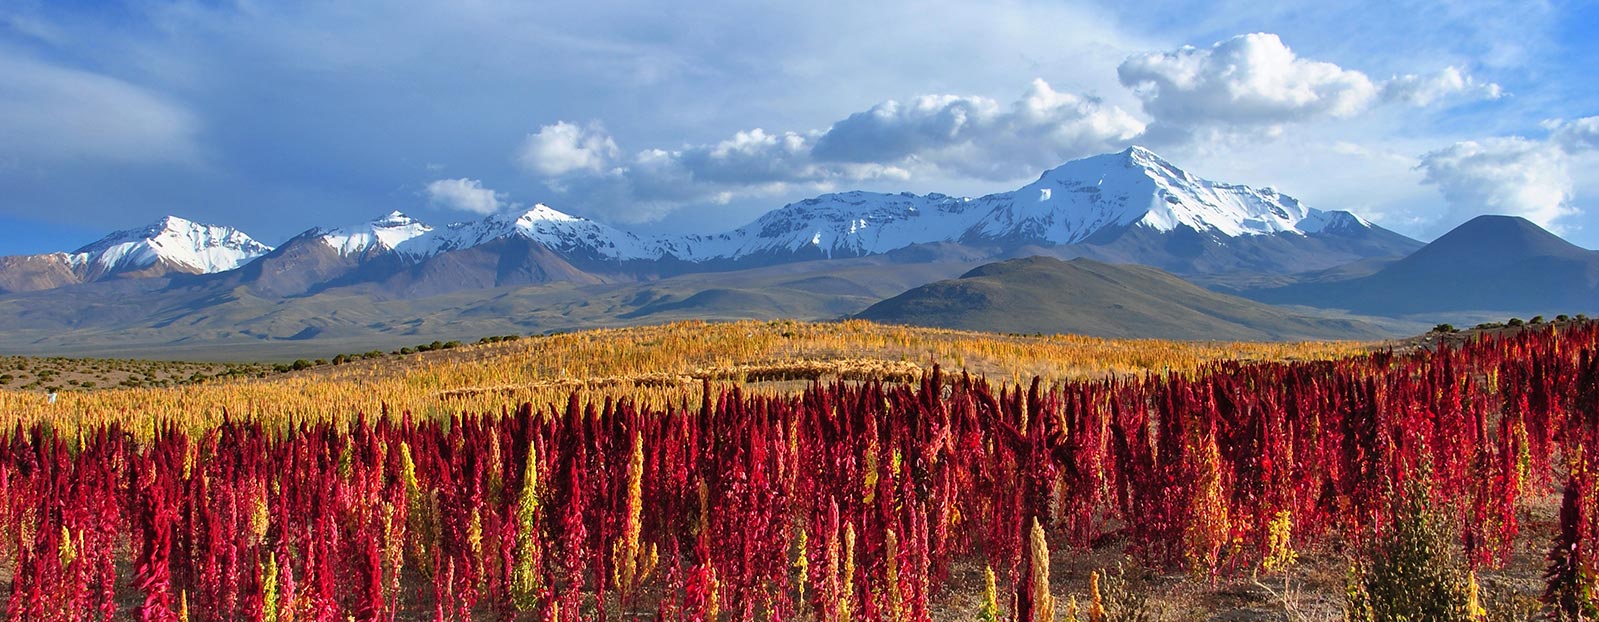 Natural habitat of quinoa